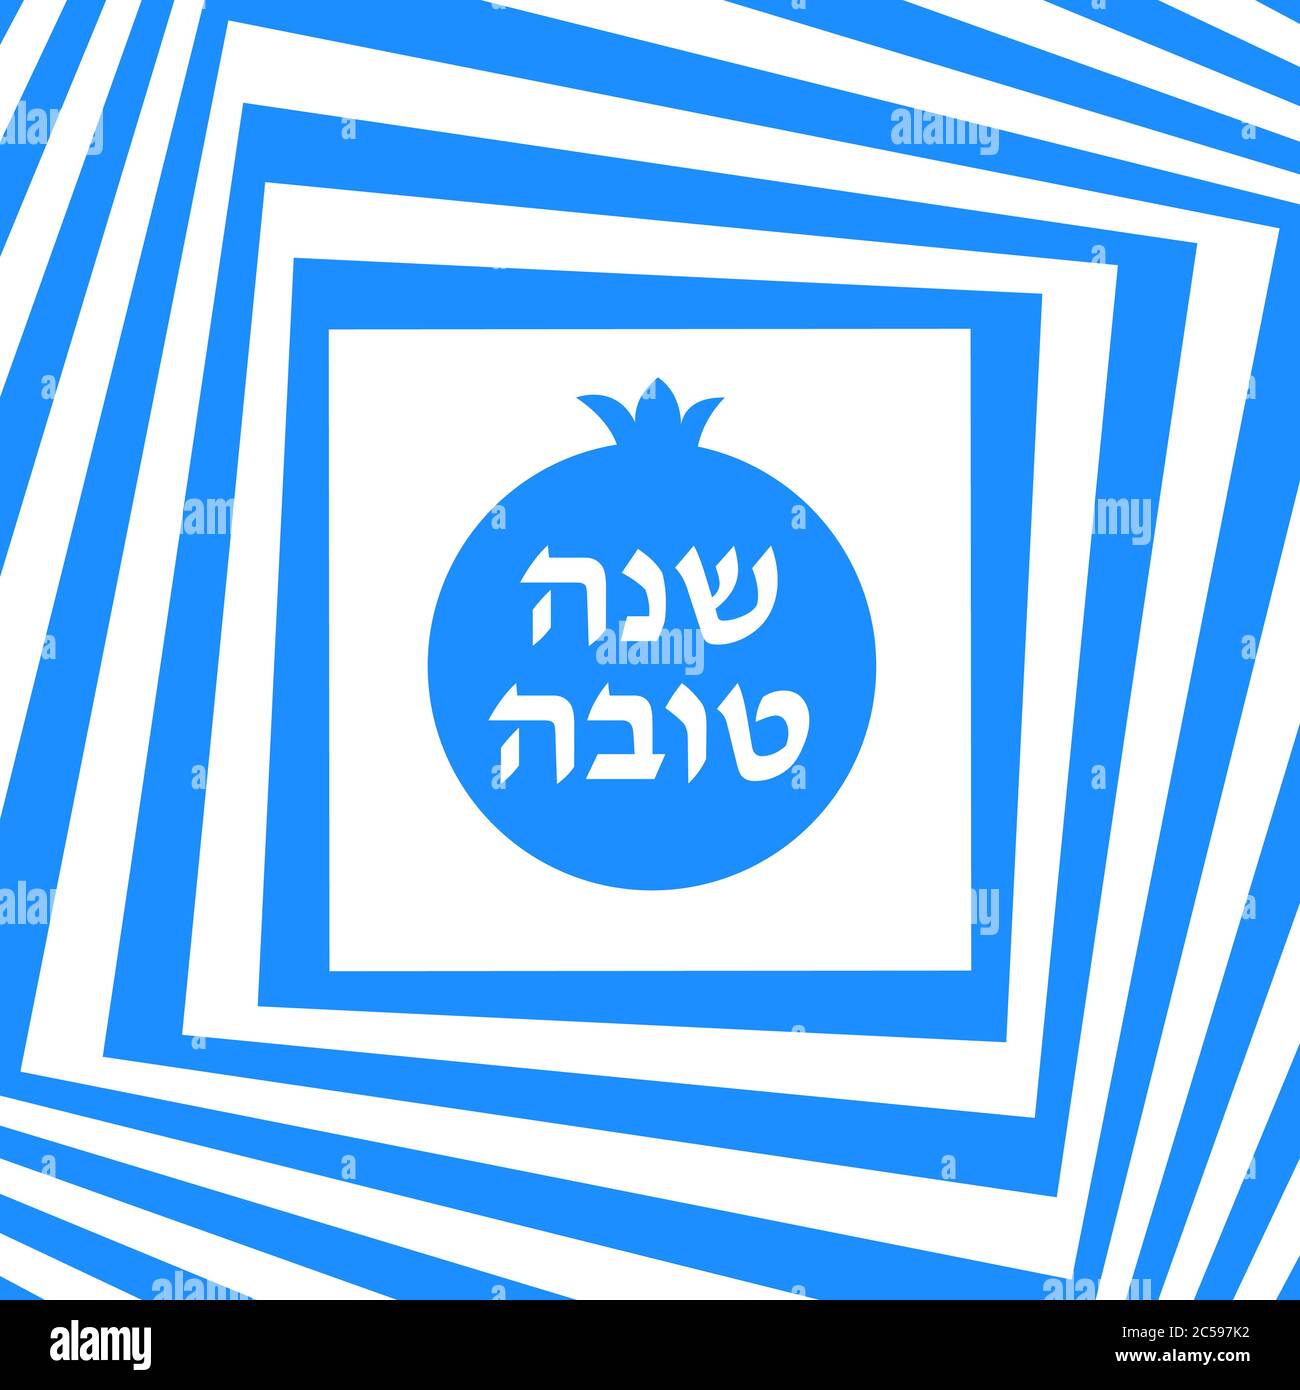 Rosh hashana greeting card - Jewish New Year vector illustration. Abstract geometric pattern and pomegranate icon. Greeting text Shana tova on Hebrew Stock Vector